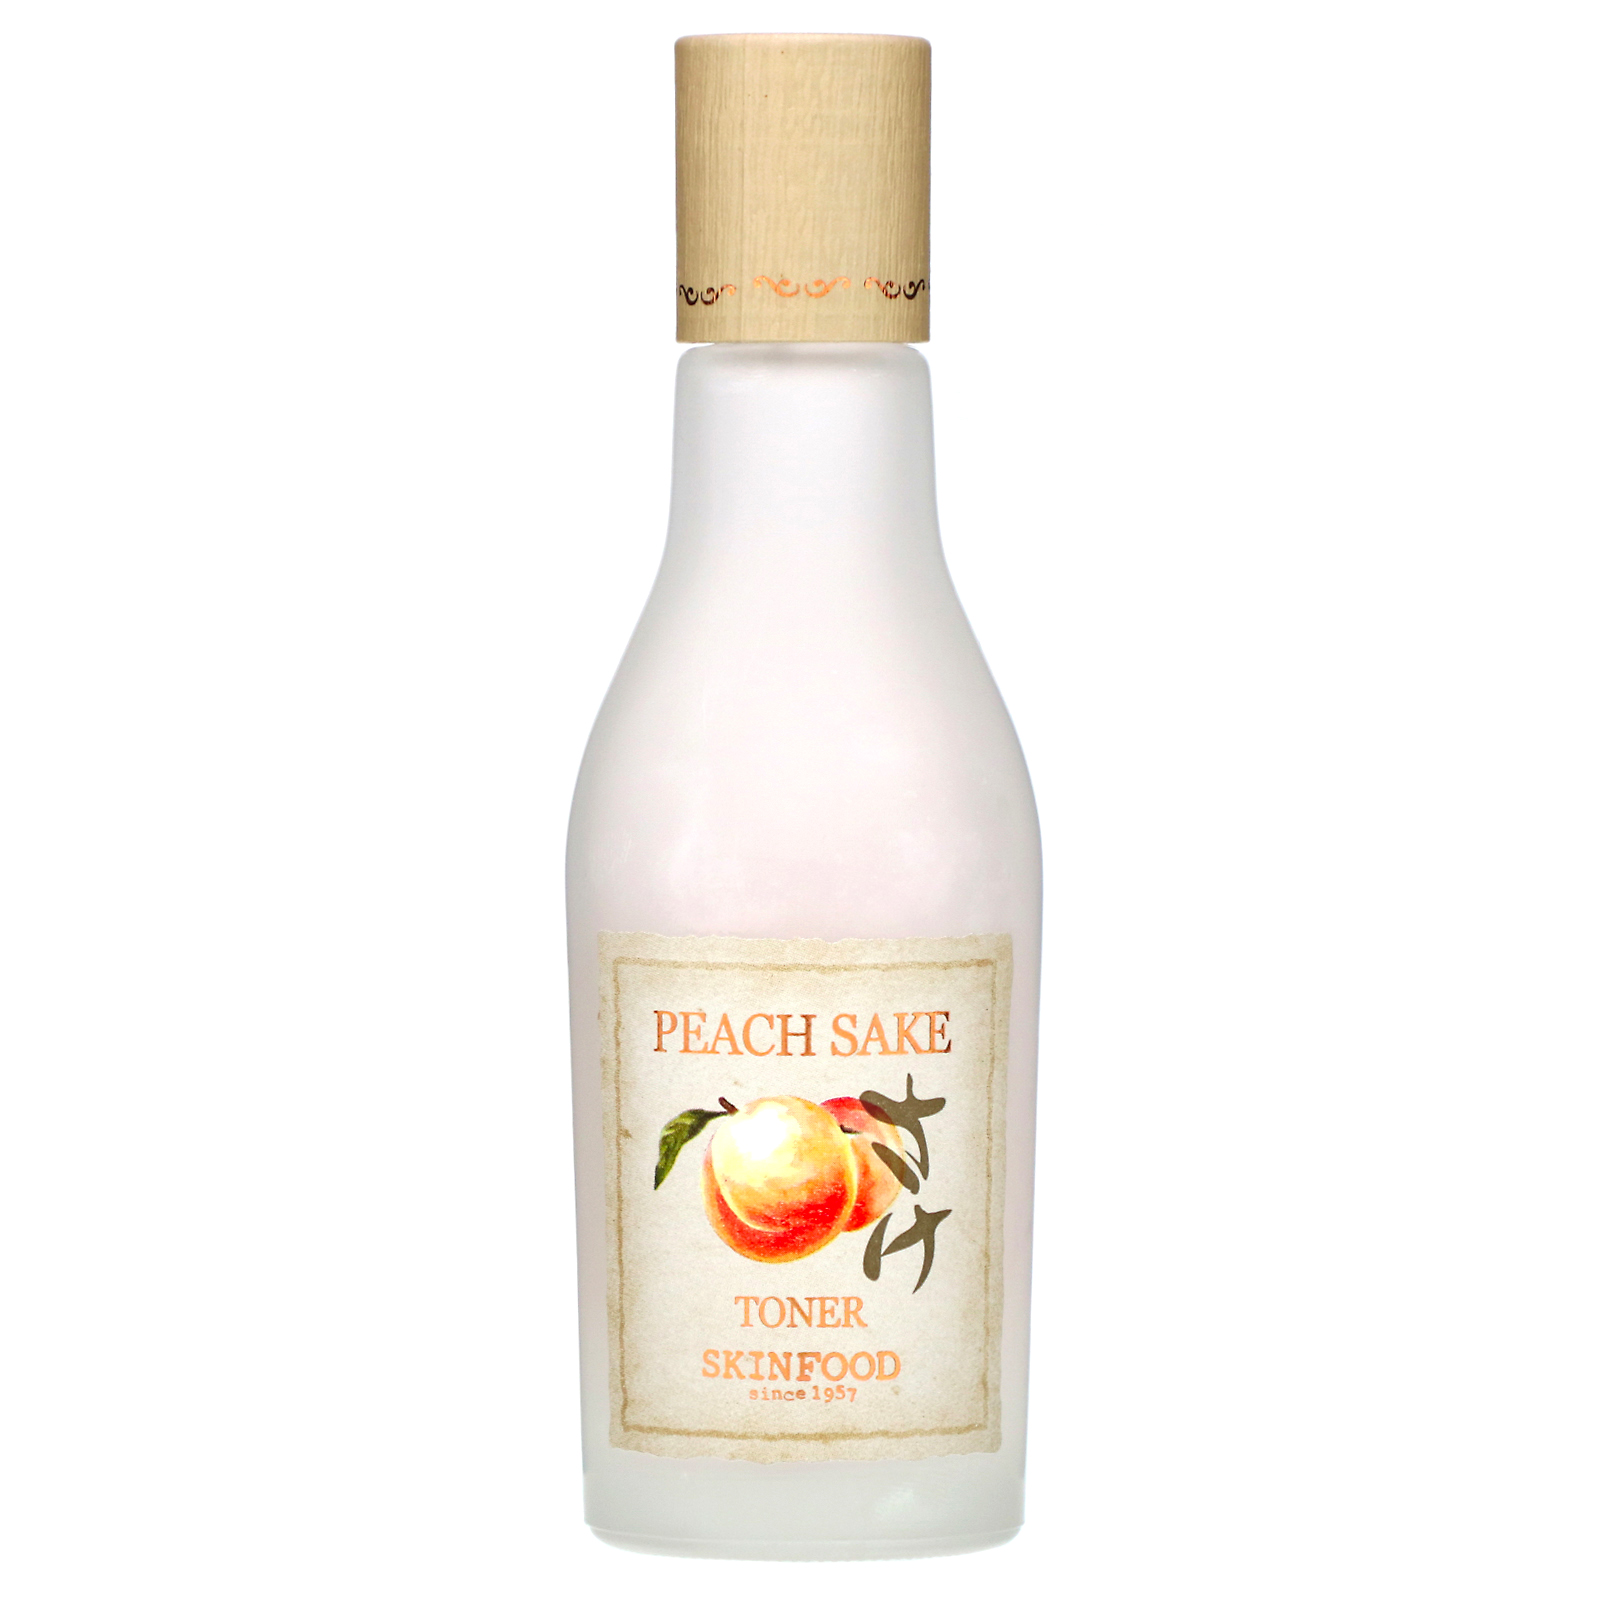  Skin Food Peach Sake Toner